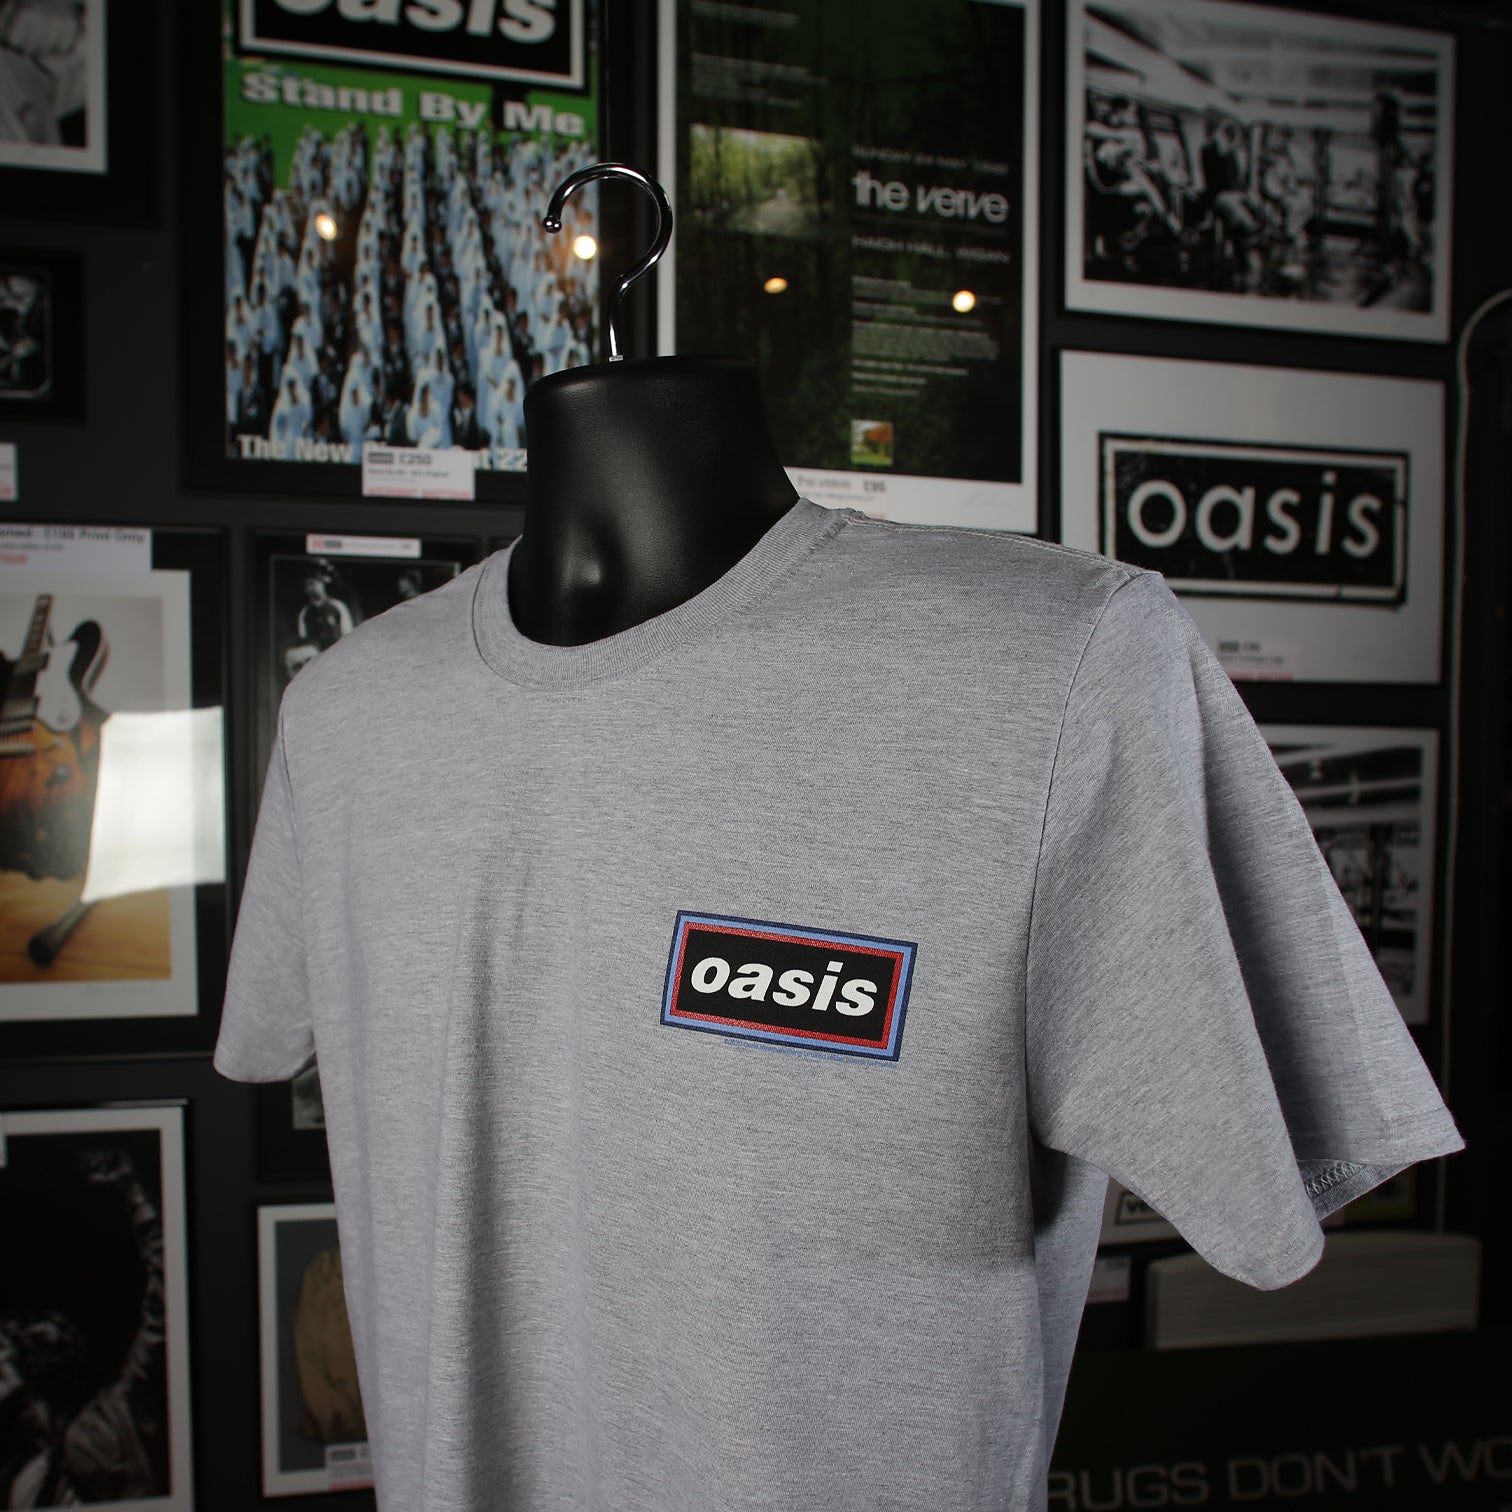 Oasis - Classic Logo, New Application T-Shirt - New Item